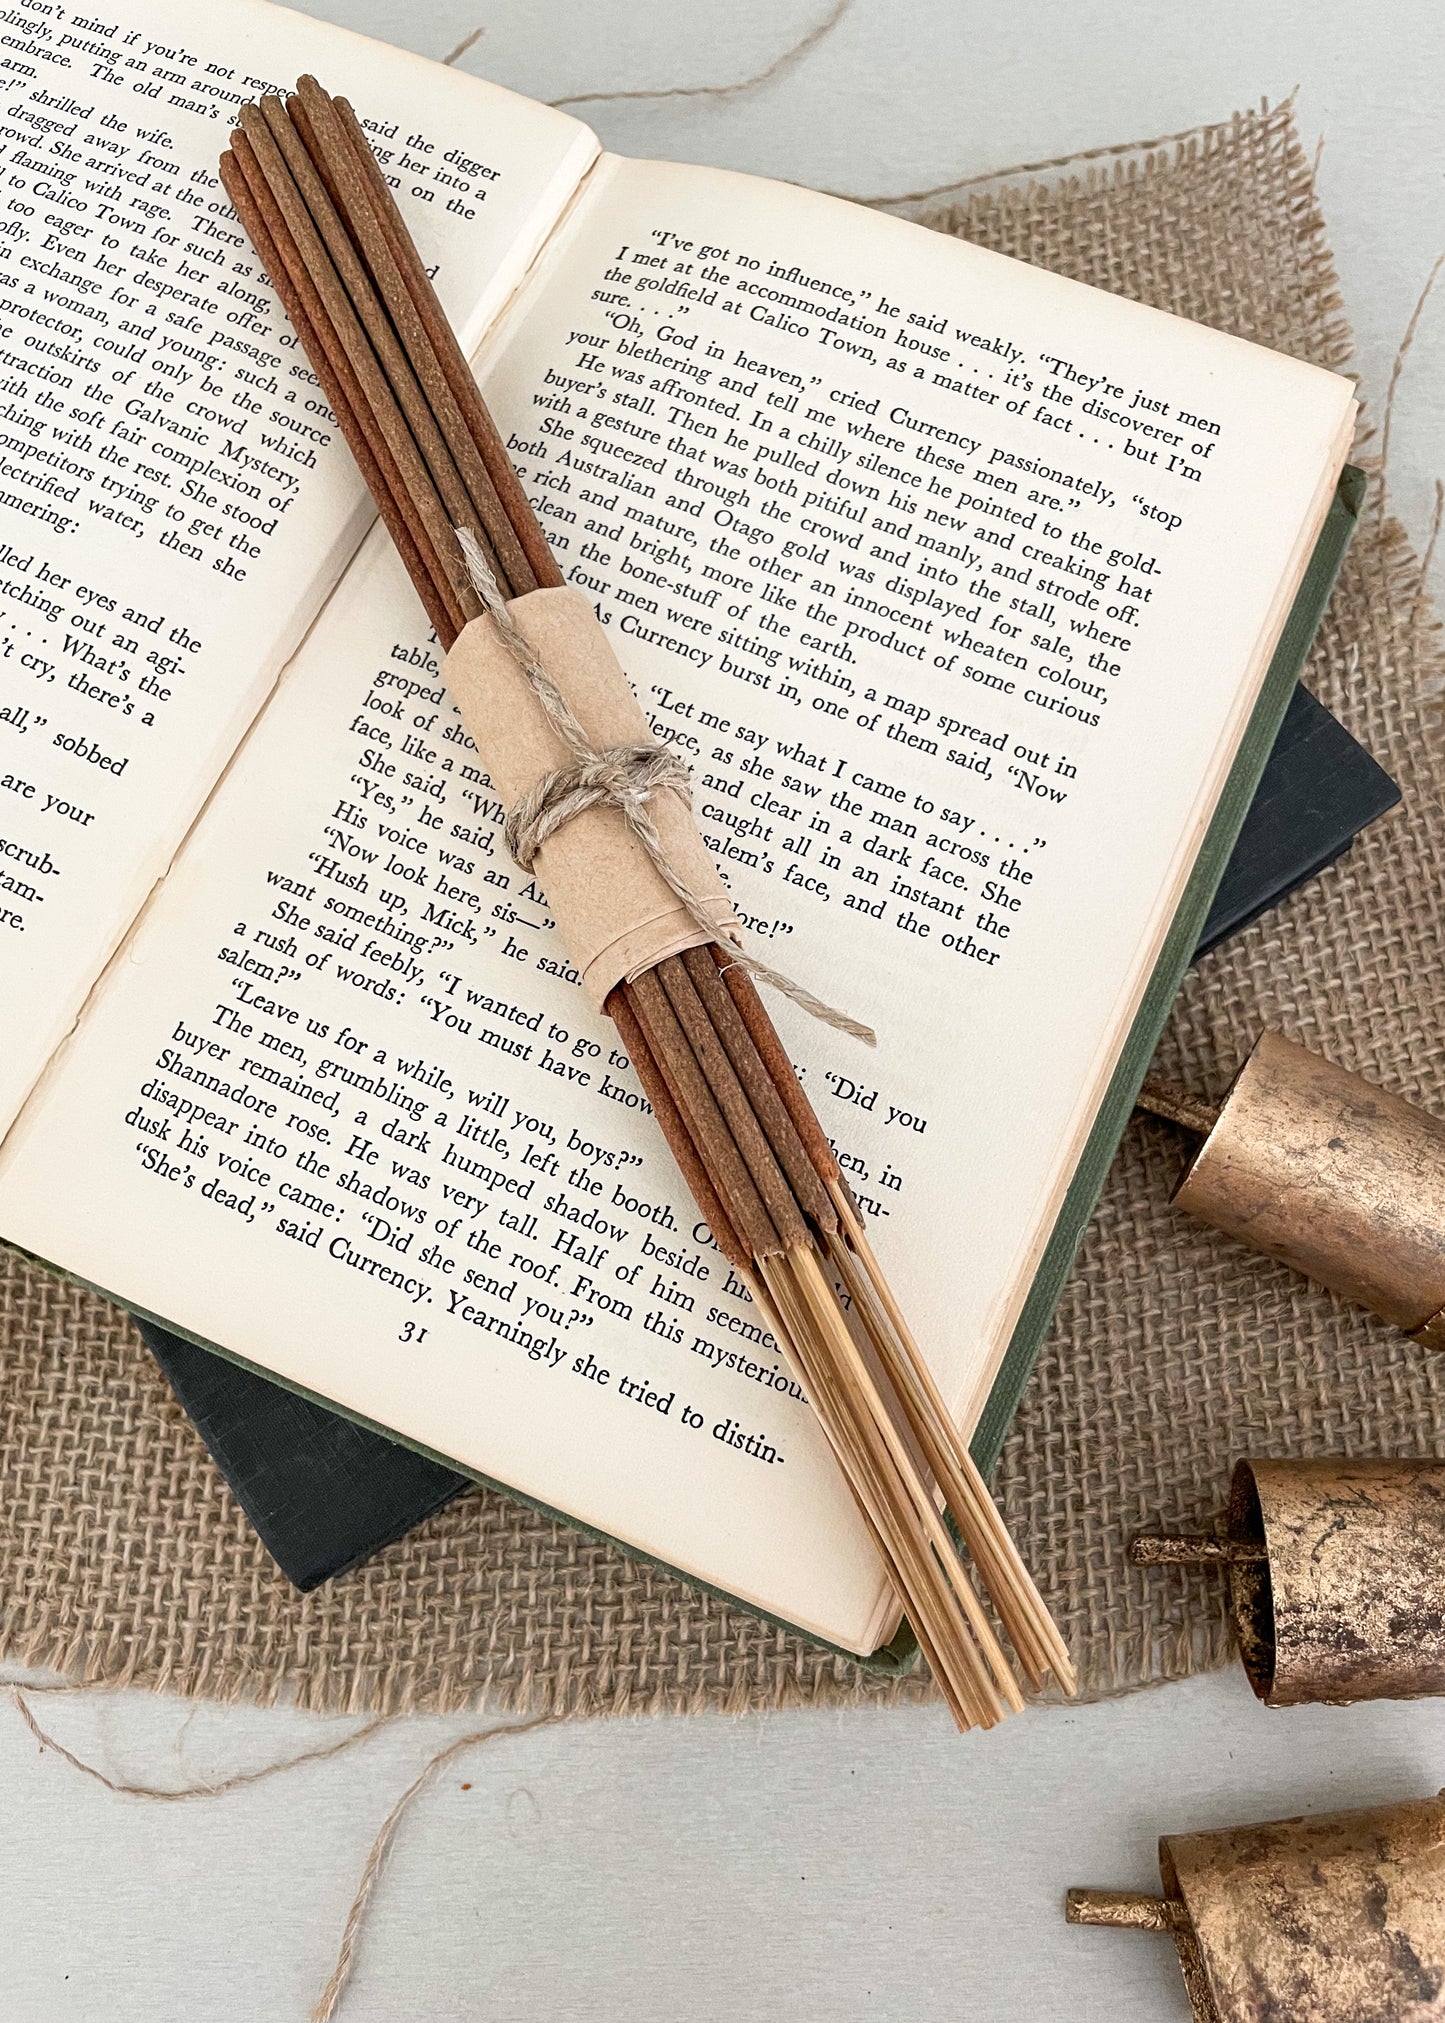 Bundle of vegan natural incense sticks handrolled in Australia styled on a vintage book